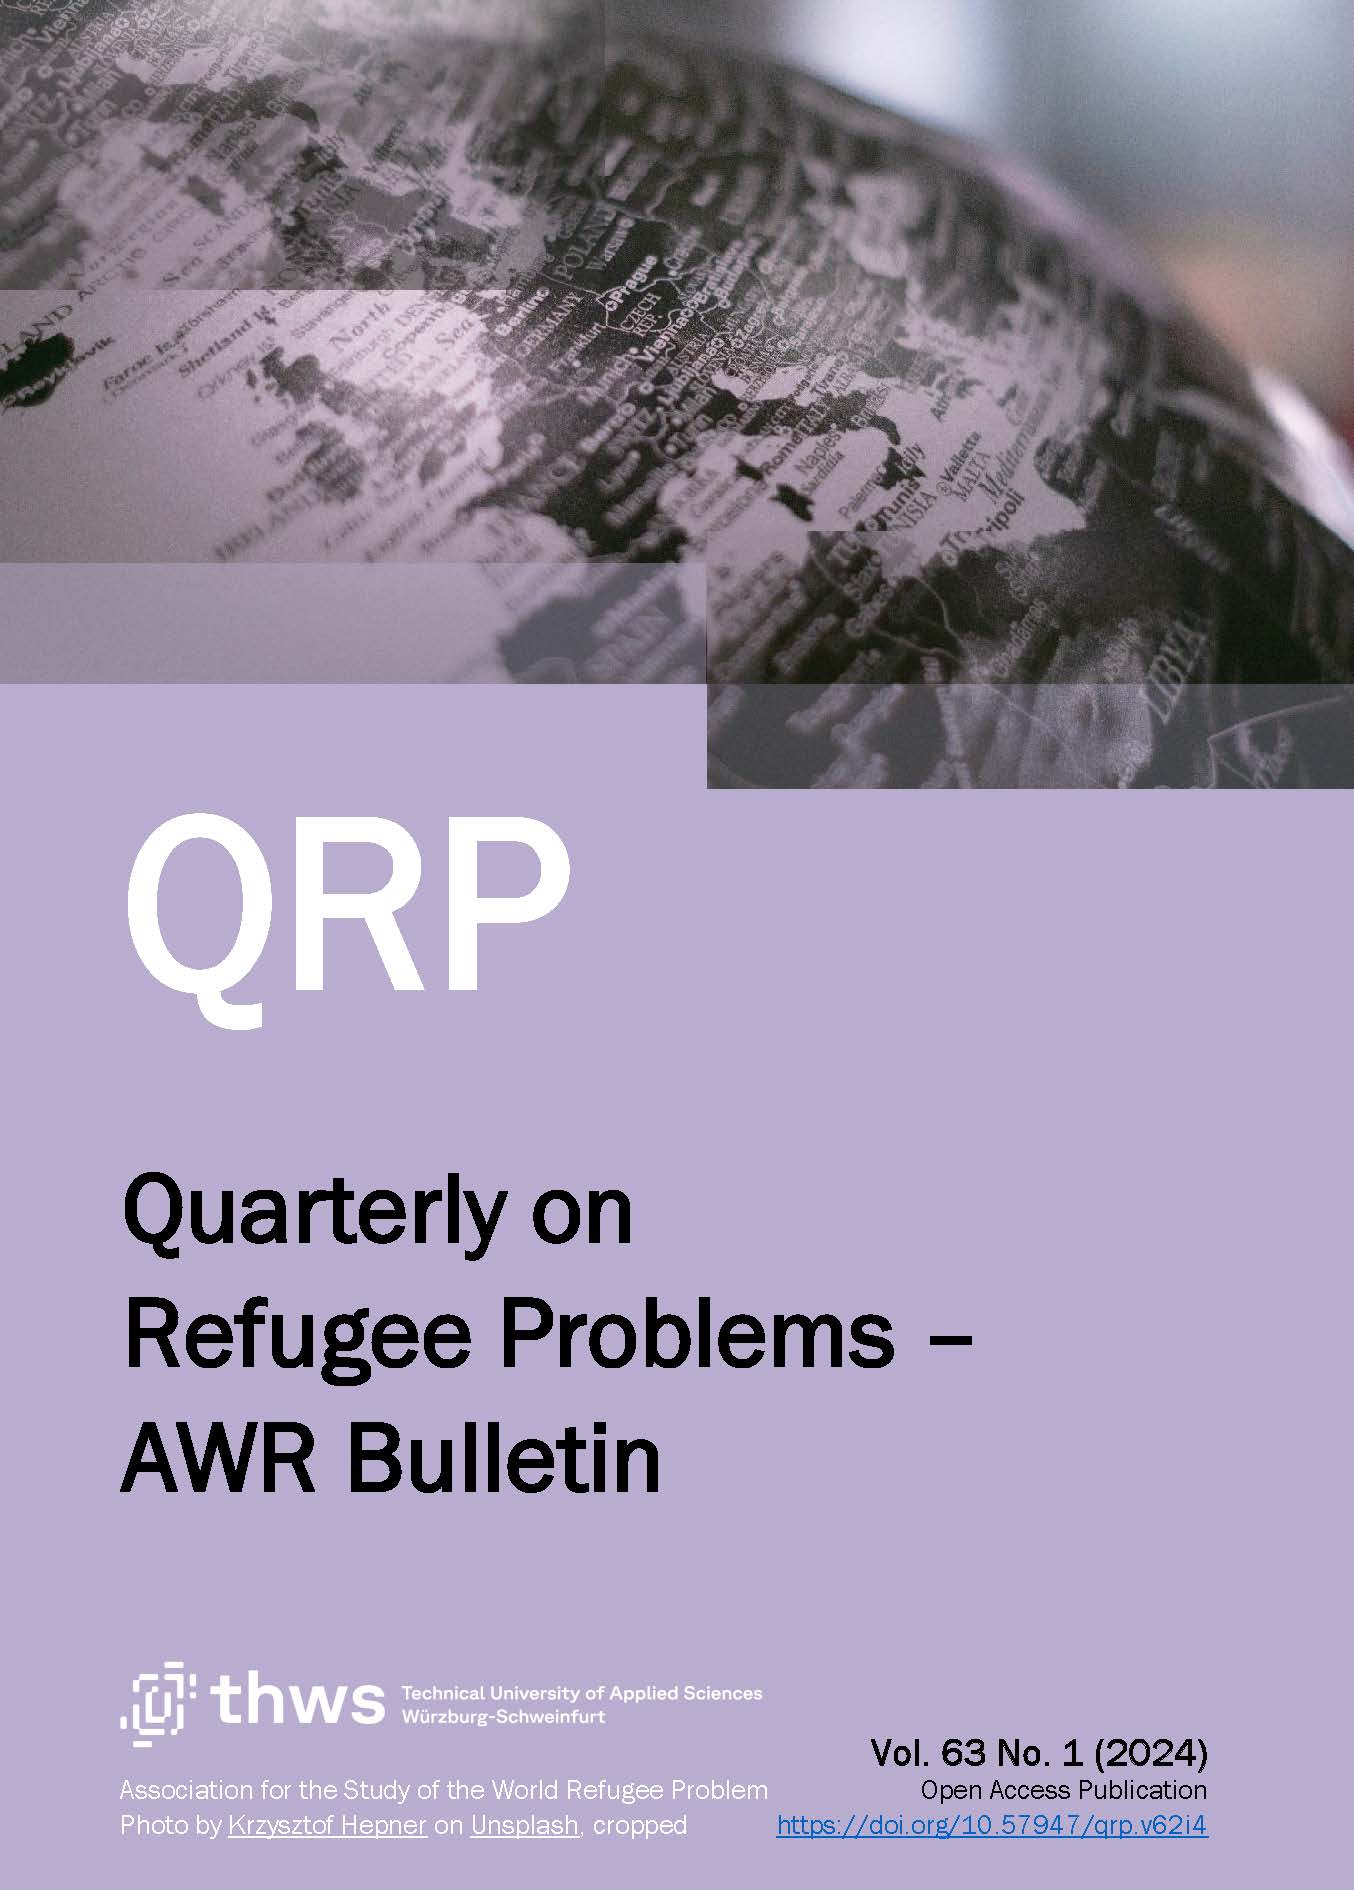 					View Vol. 63 No. 1 (2024): Quarterly on Refugee Problems - AWR Bulletin (QRP)
				